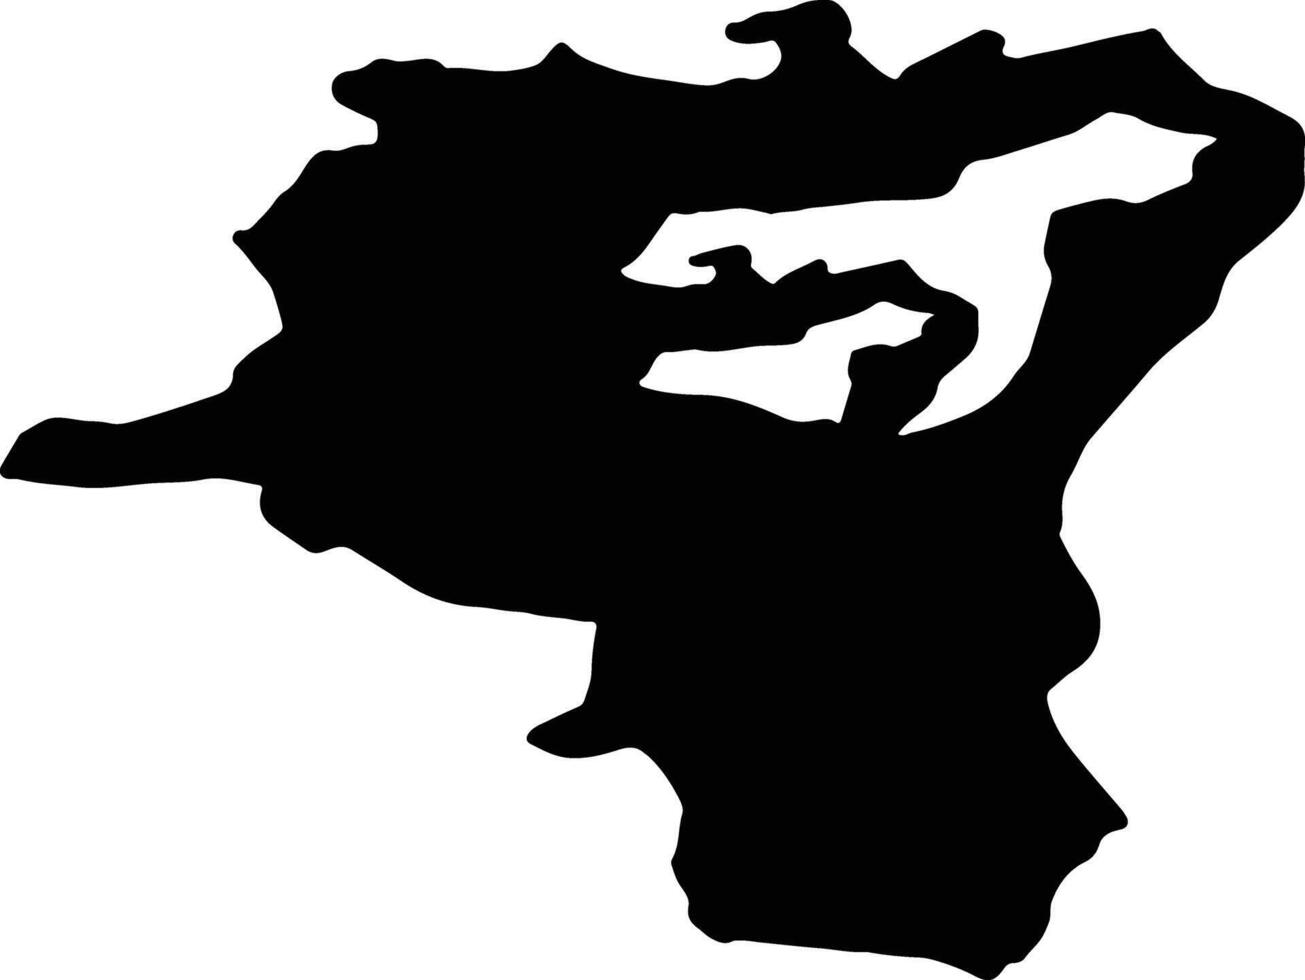 sankt gallen Svizzera silhouette carta geografica vettore